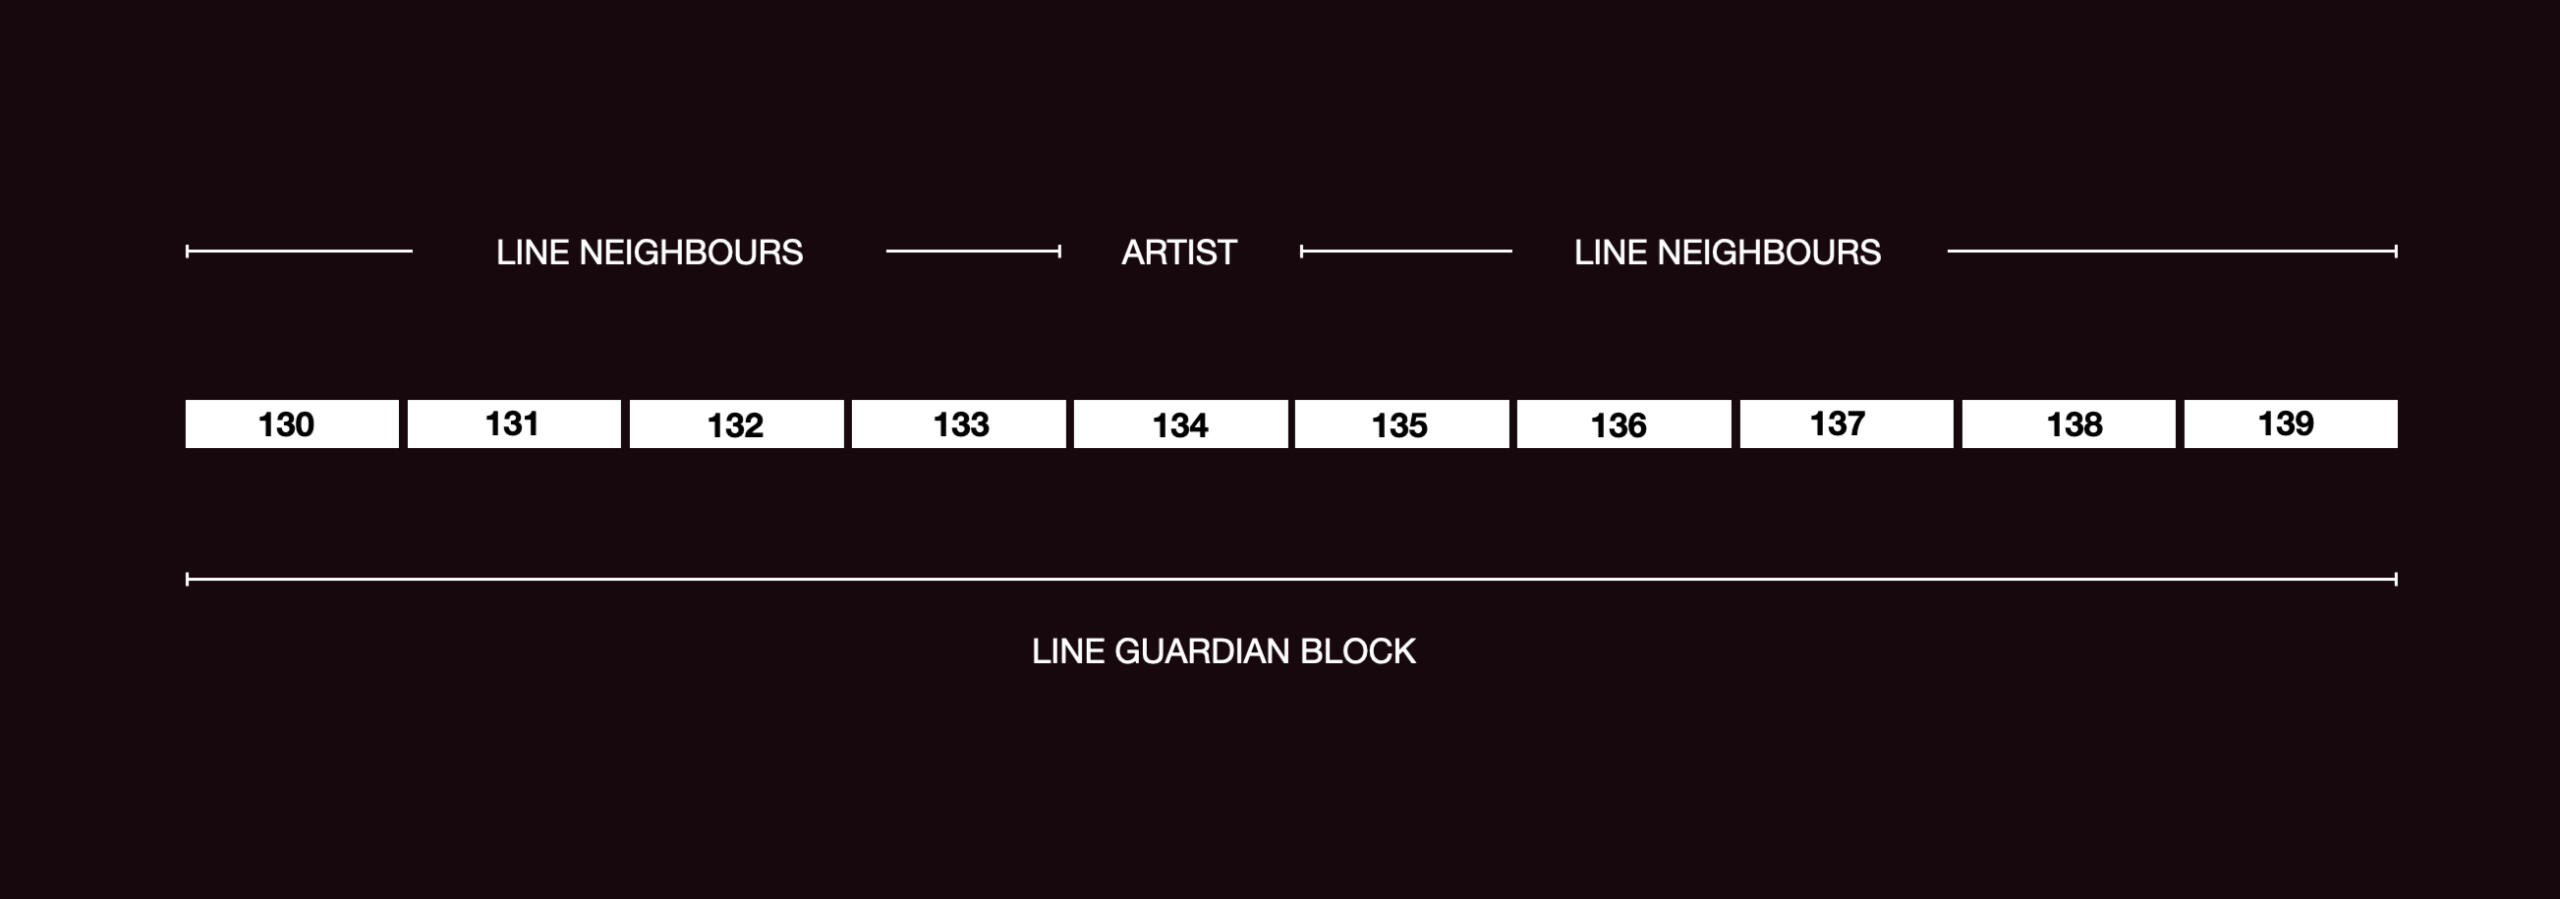 Line Guardian Block